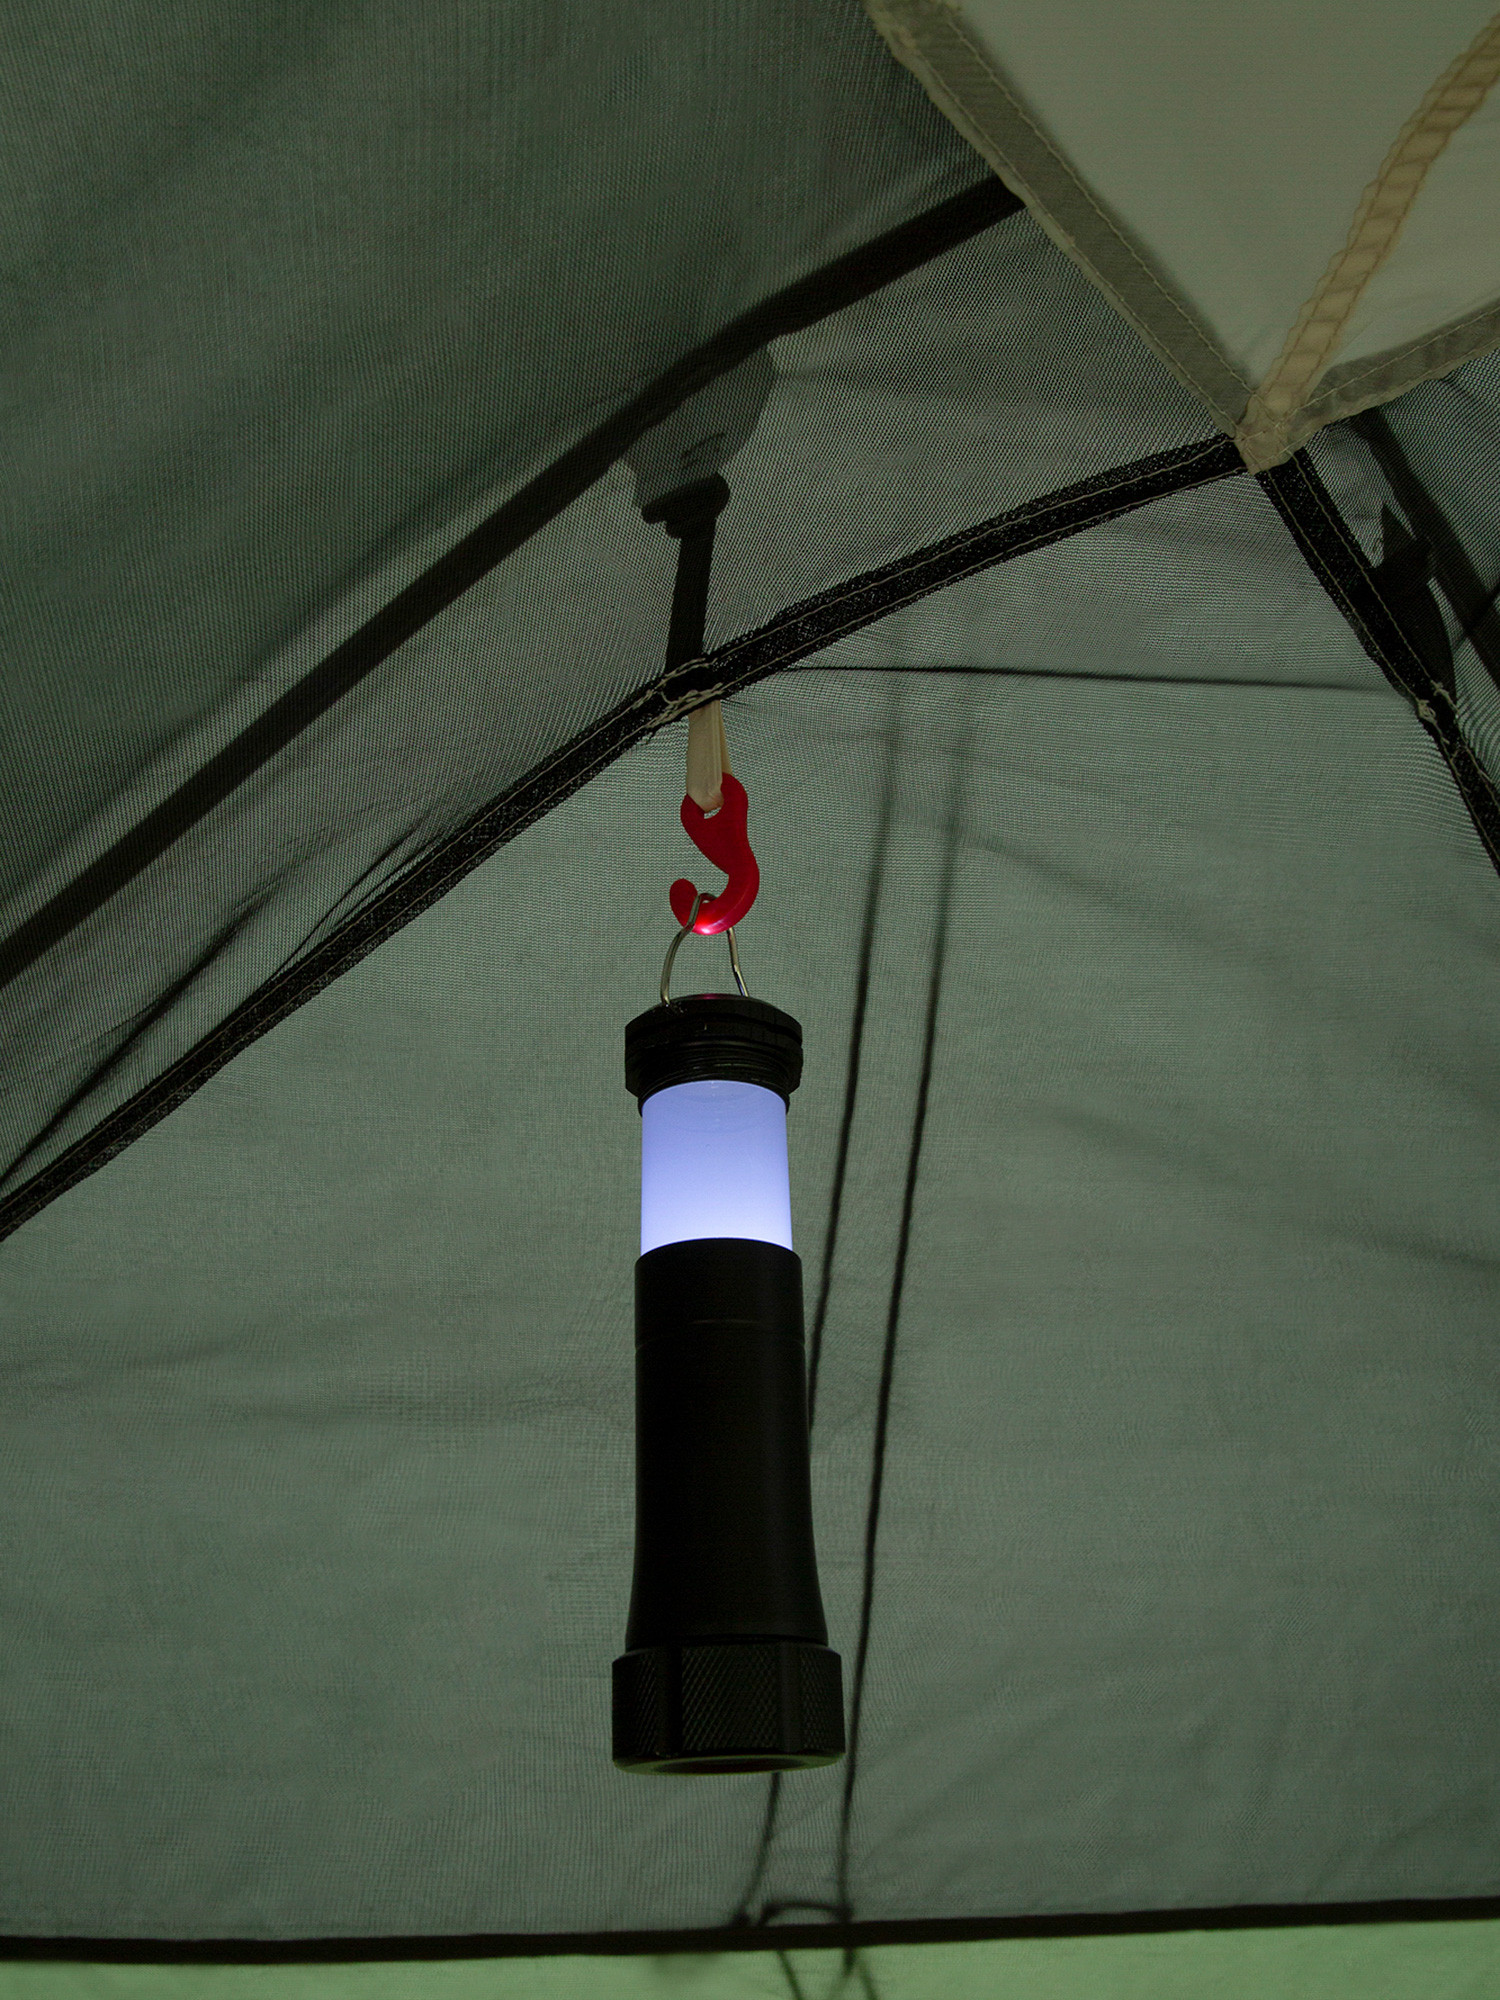 Палатка 3-местная Outventure 1 Second Tent 3